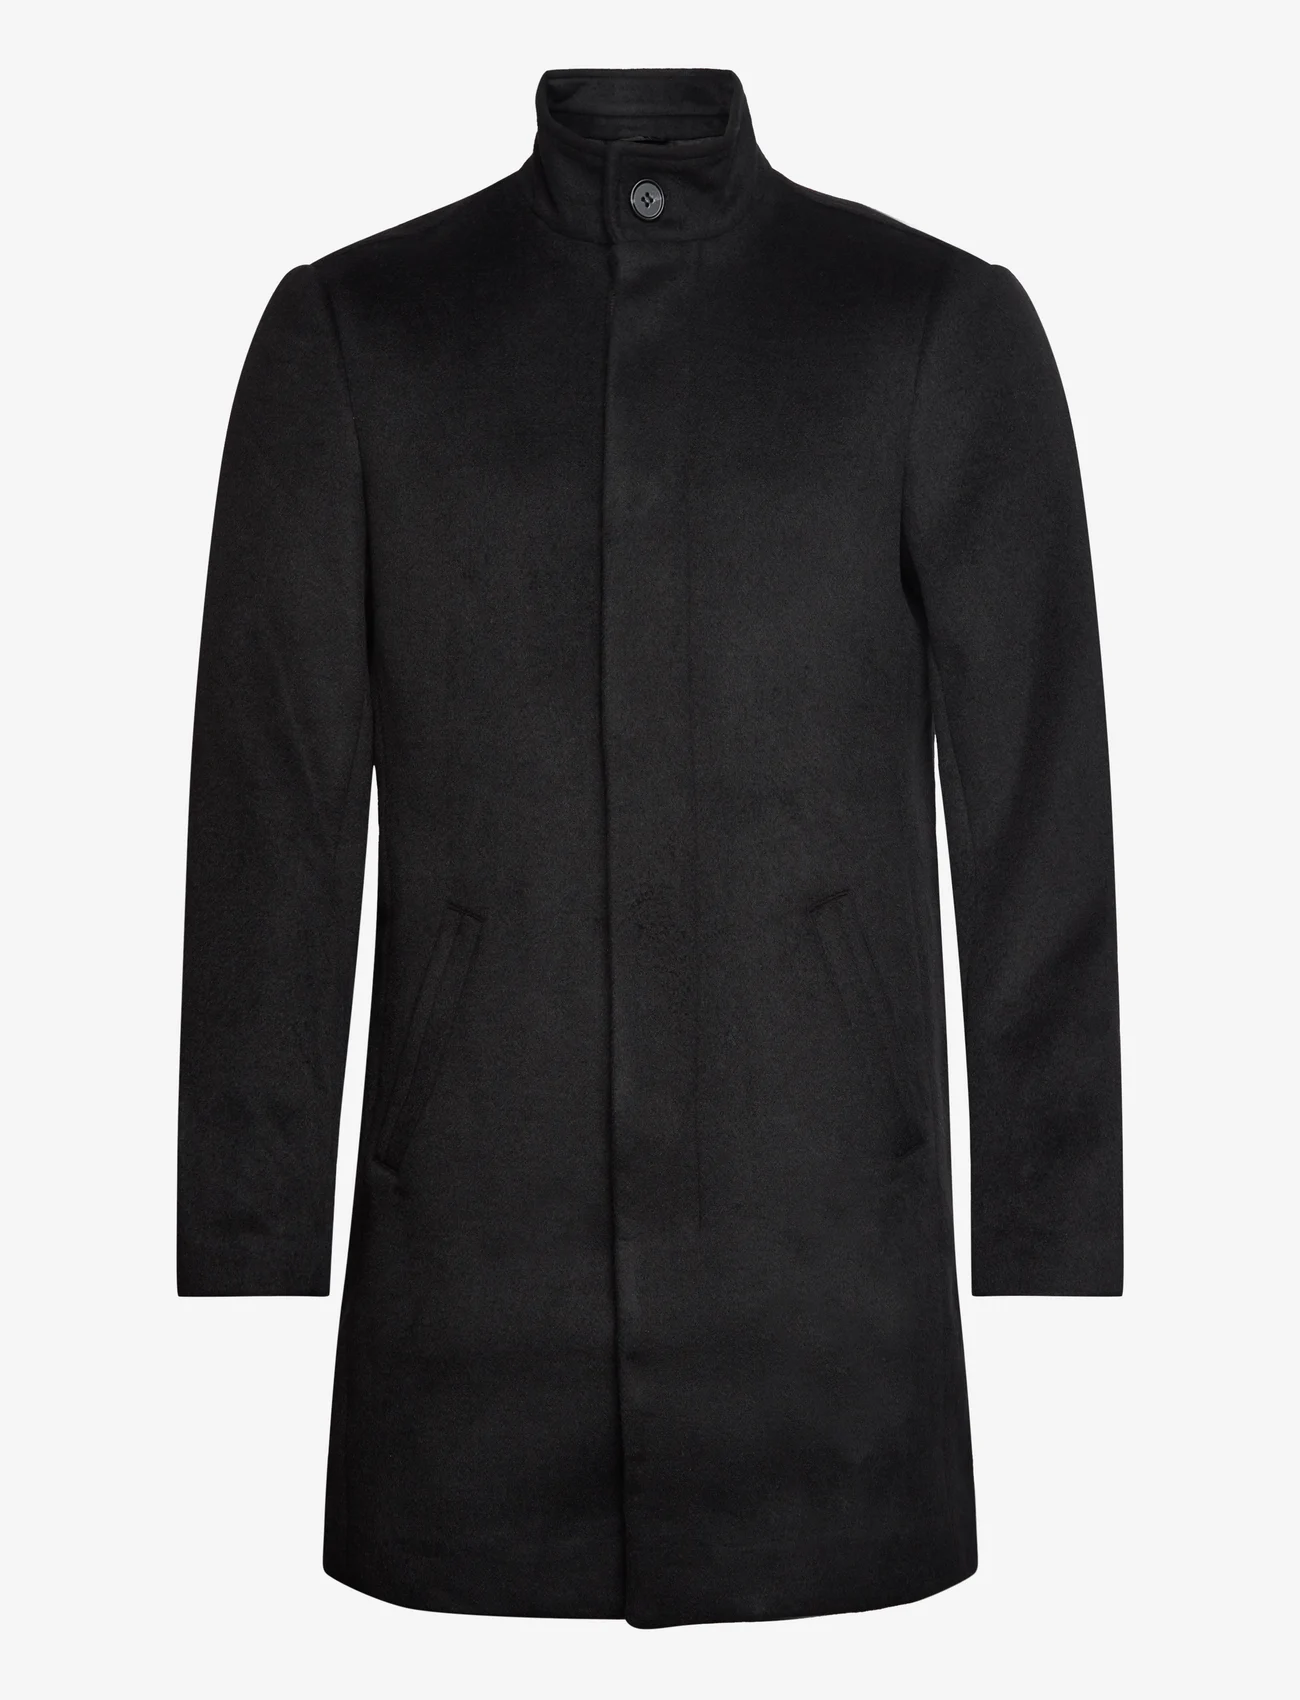 Bruuns Bazaar - KatBBAustin coat - winter jackets - black - 0